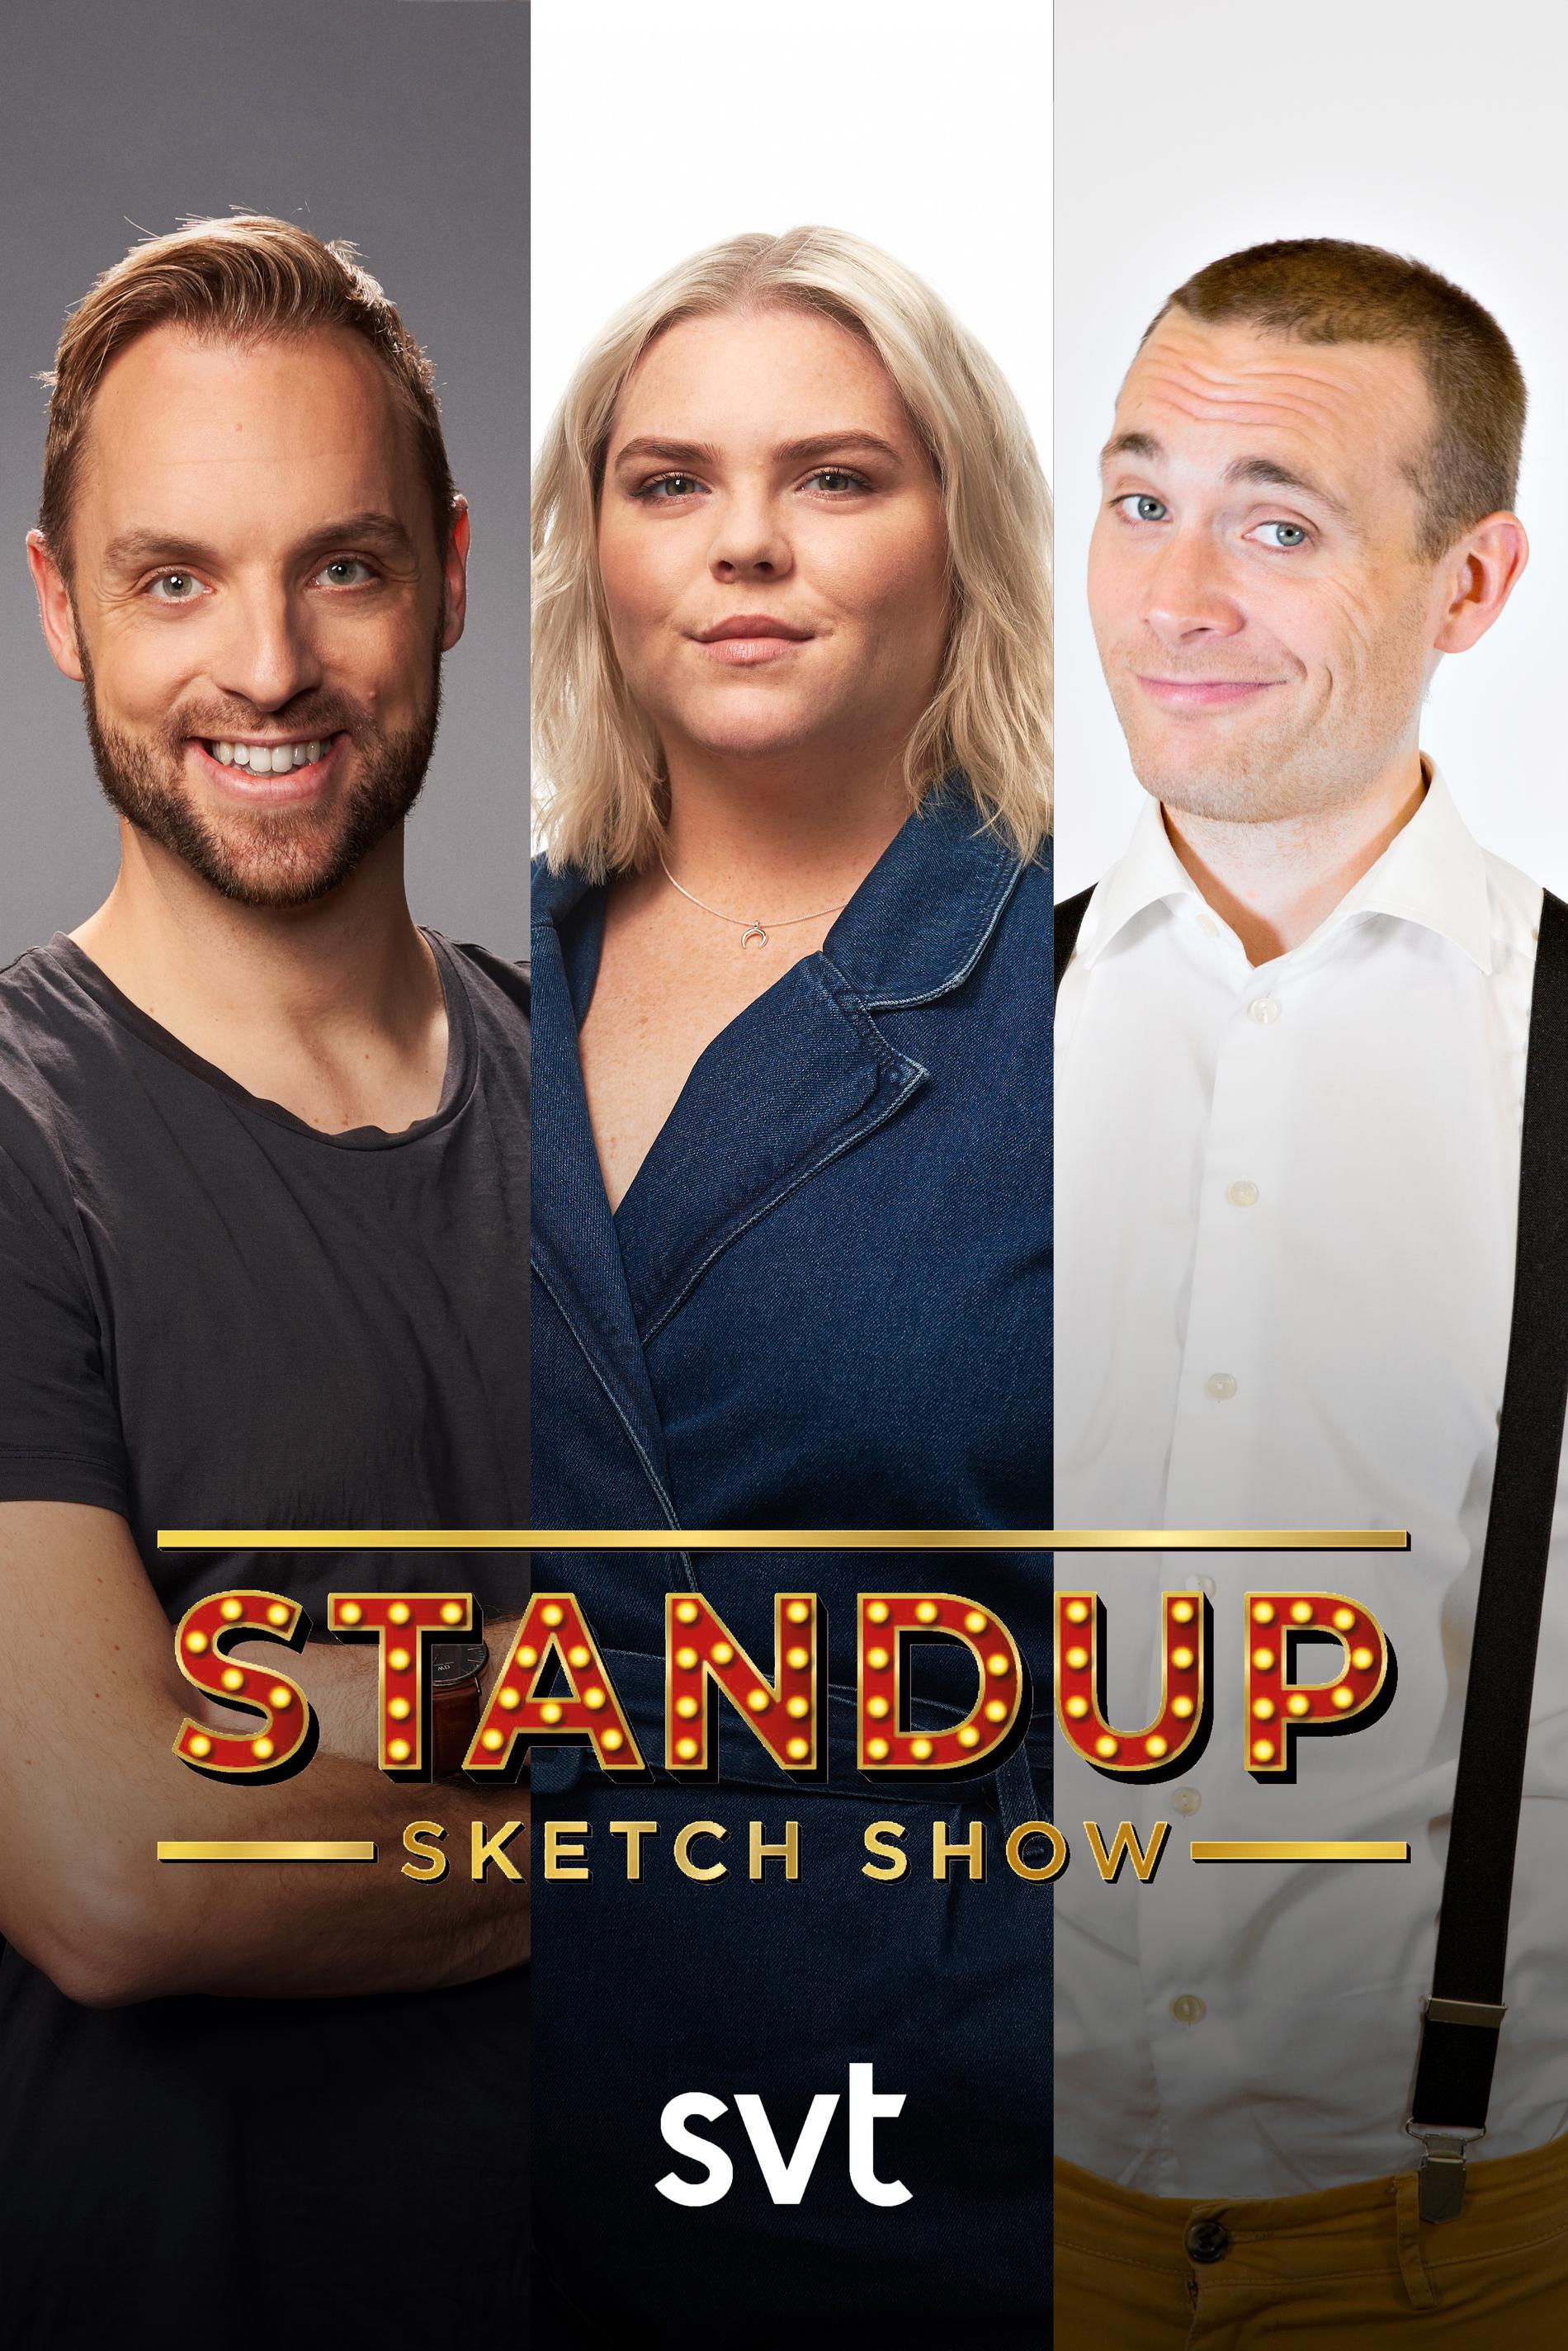 ”Standup sketch show”.